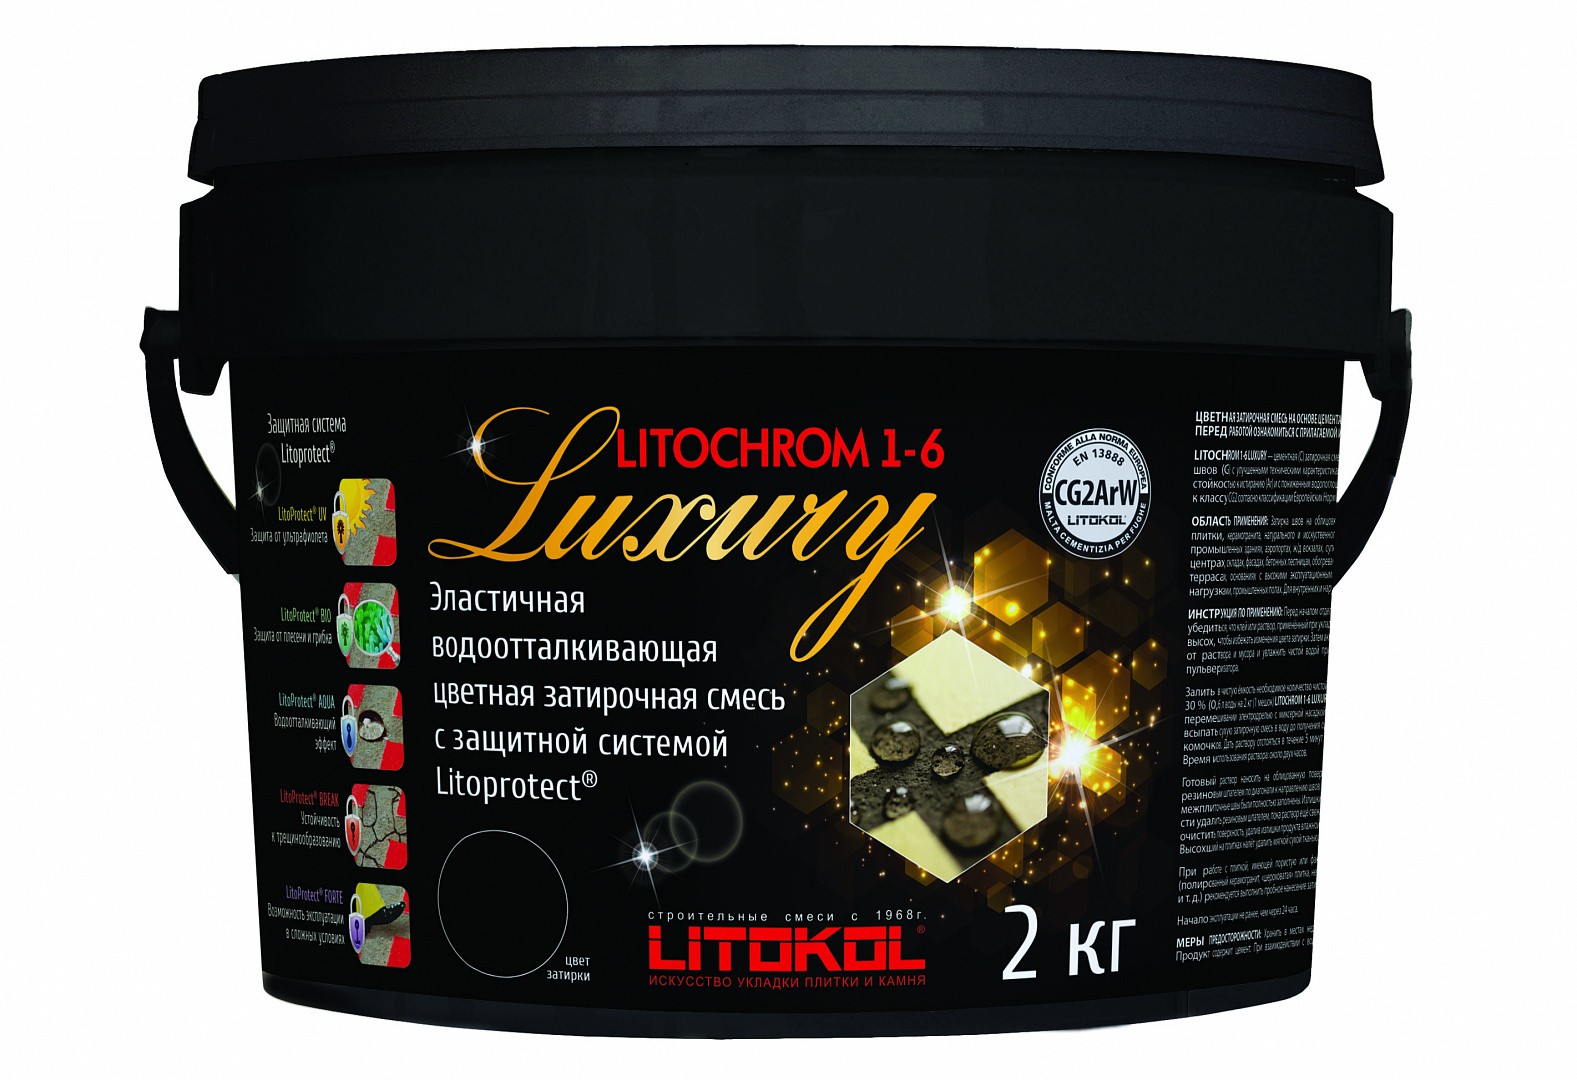 Цементная затирочная смесь LITOCHROM 1-6 LUXURY C.660